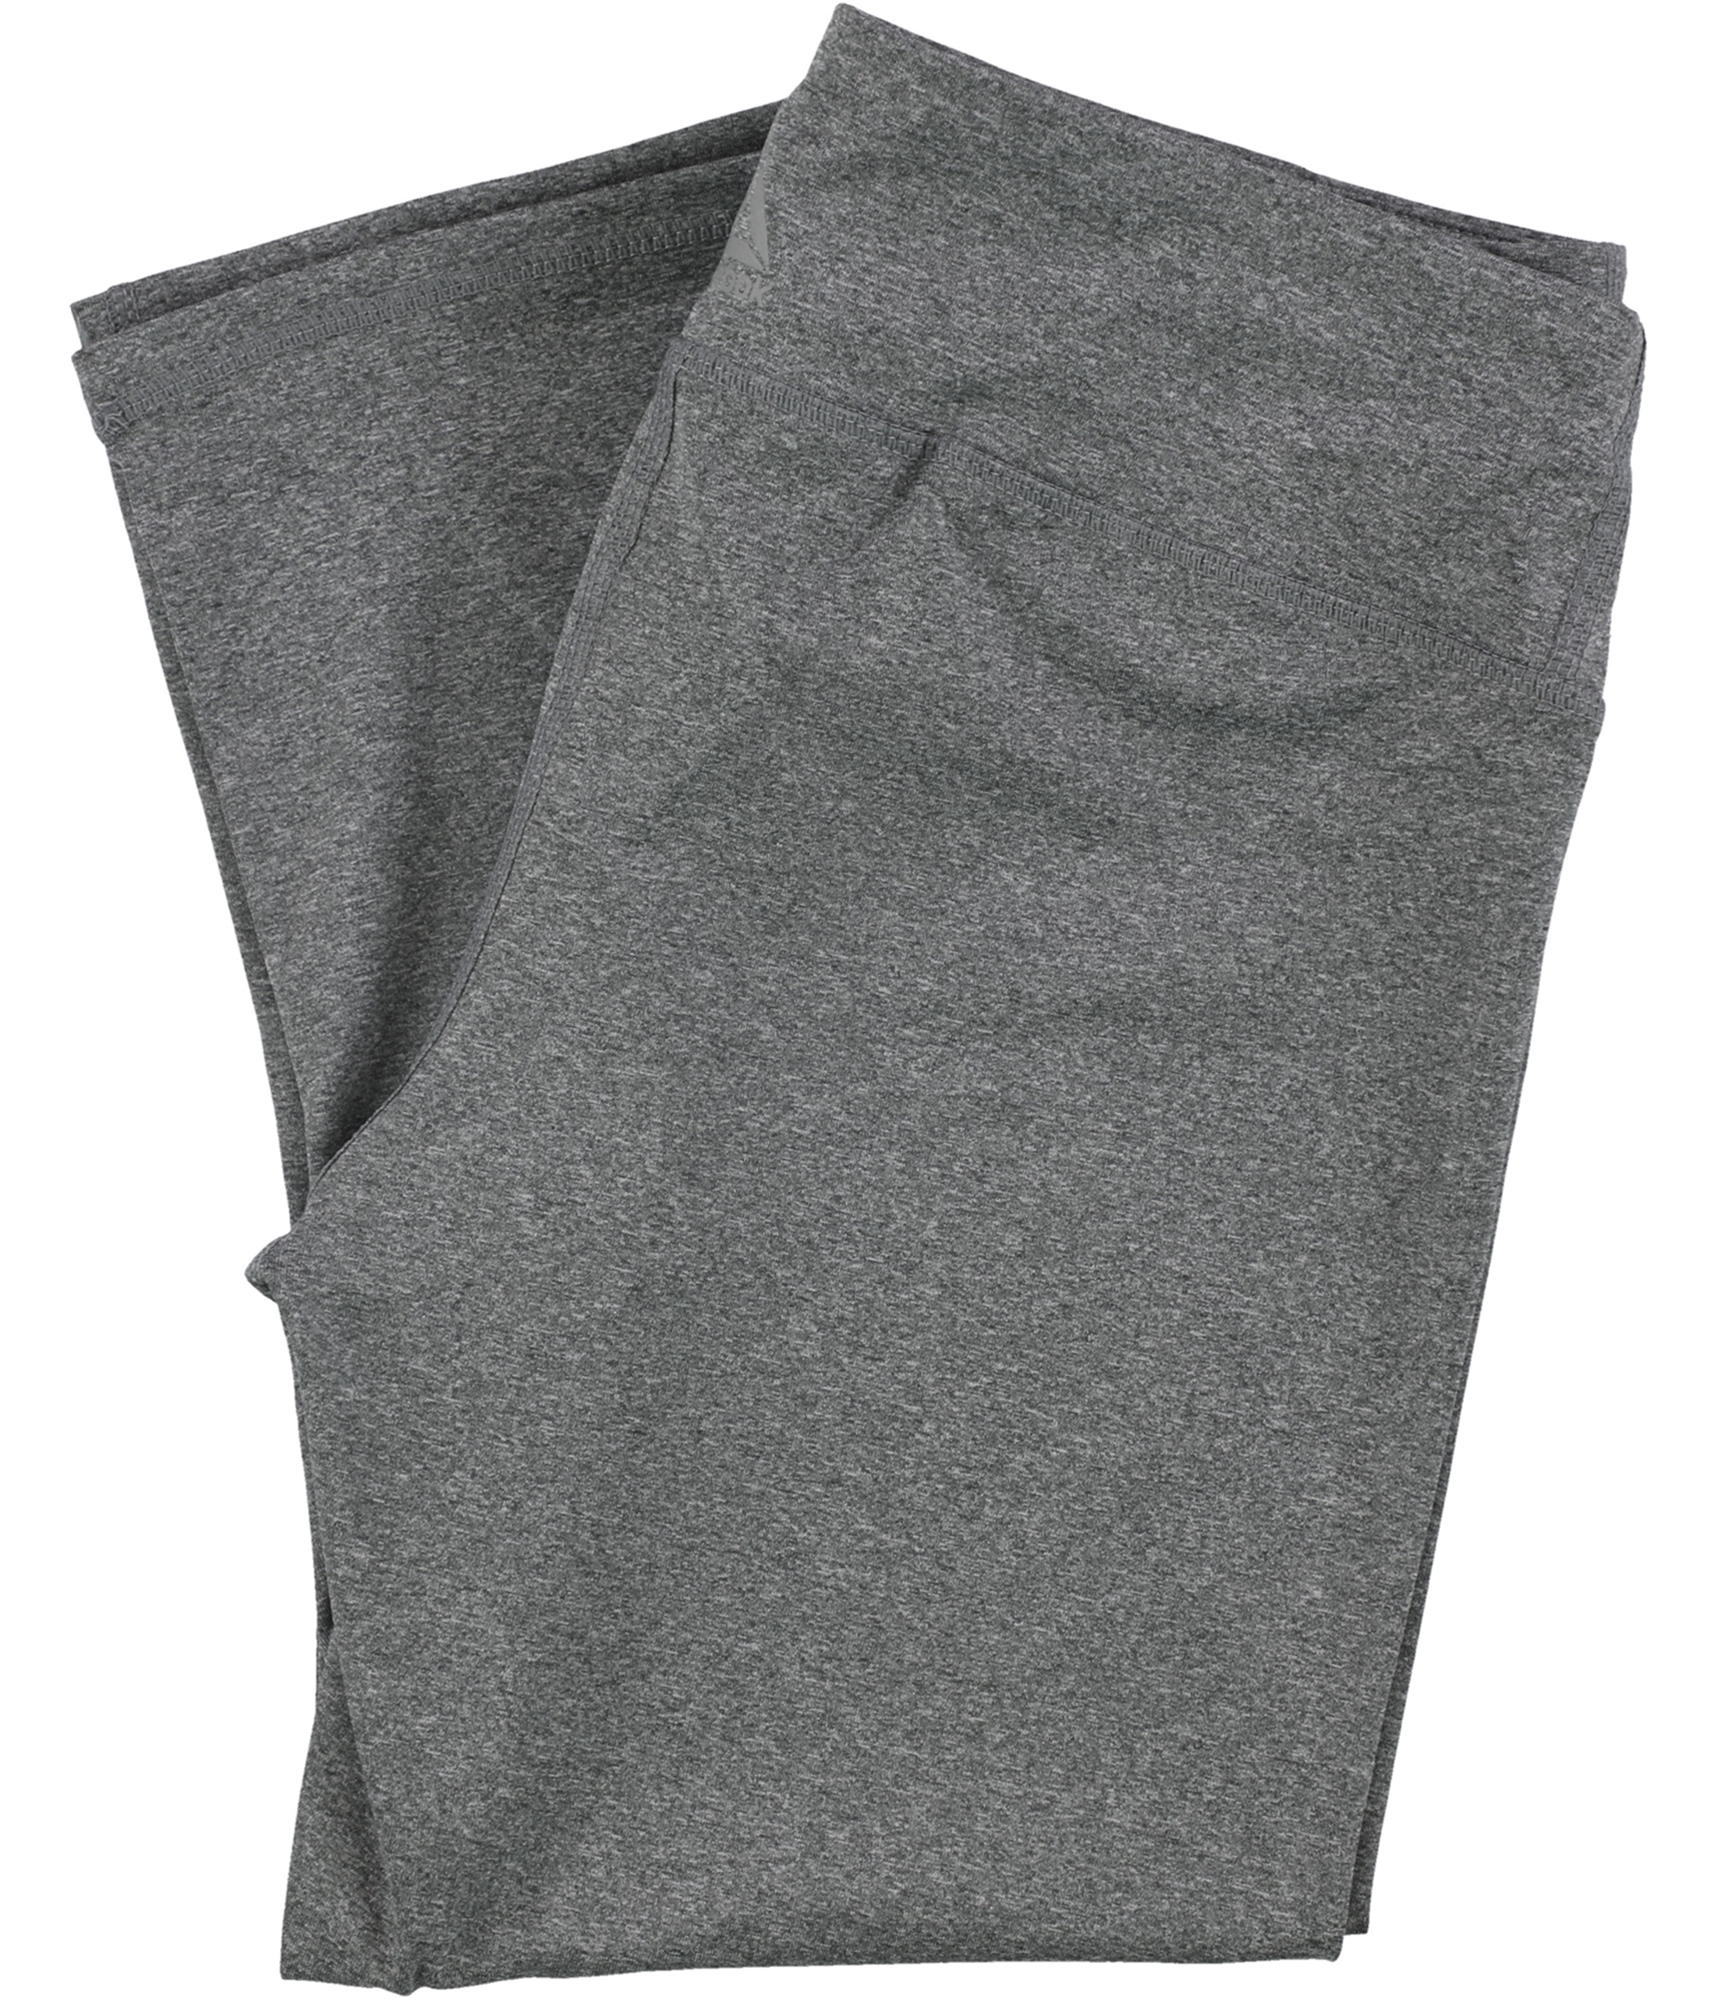 Buy a Reebok Womens Branded Capri Compression Athletic Pants